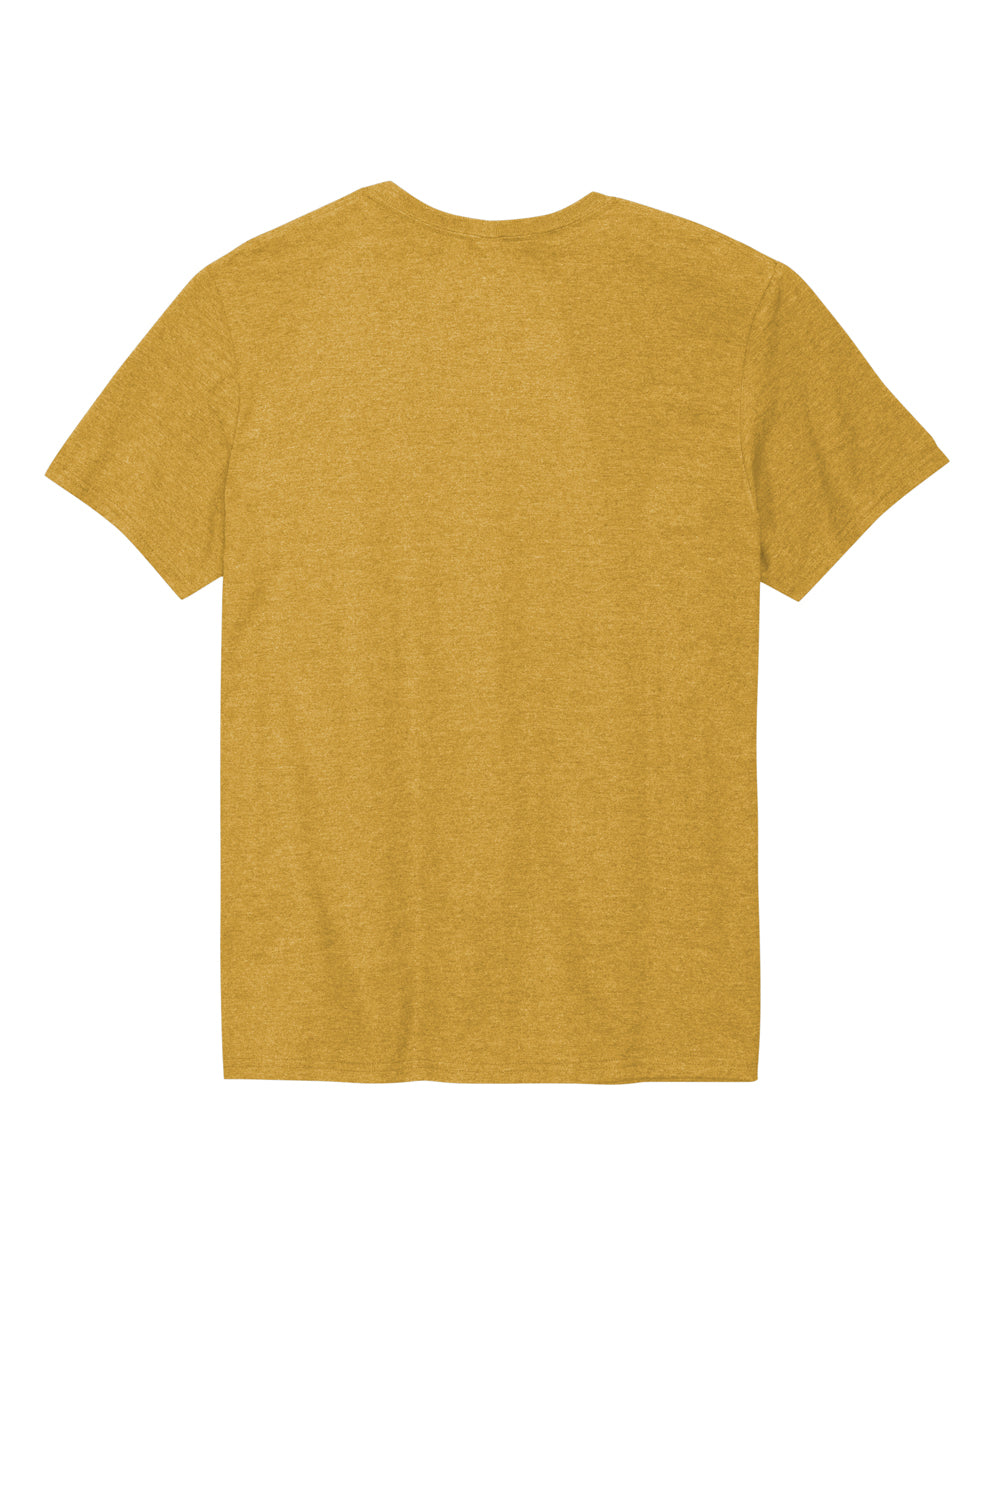 Jerzees 560M Mens Premium Blend Ring Spun Short Sleeve Crewneck T-Shirt Heather Mustard Yellow Flat Back